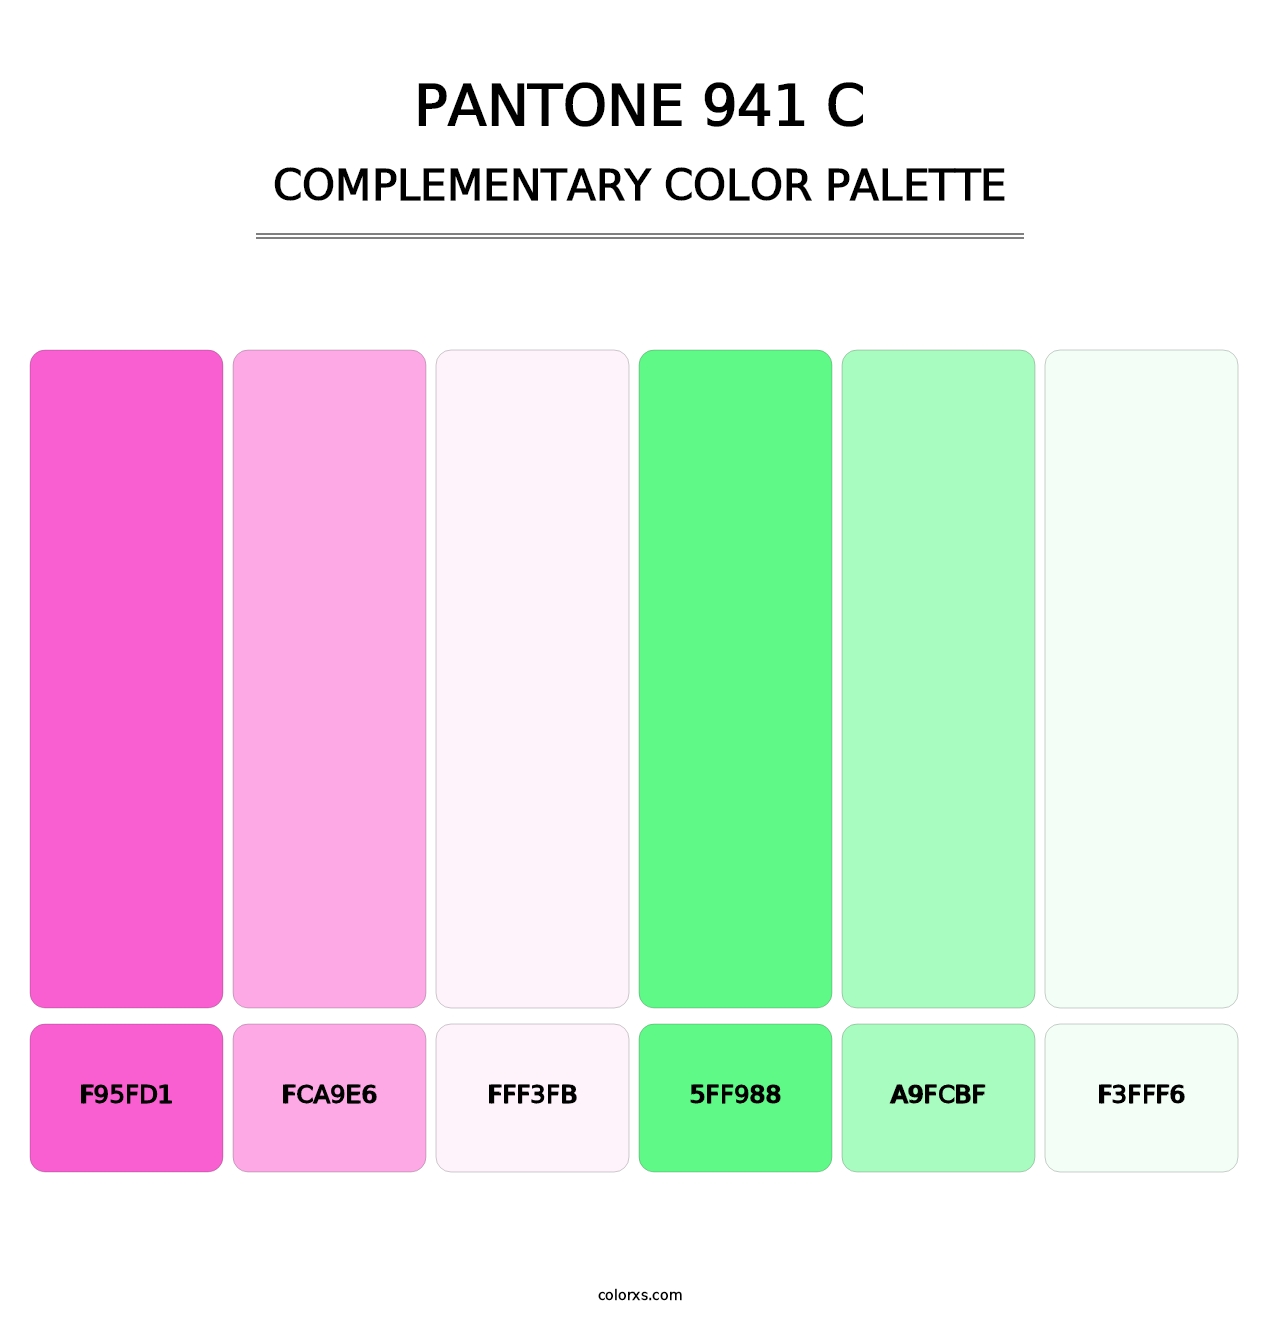 PANTONE 941 C - Complementary Color Palette